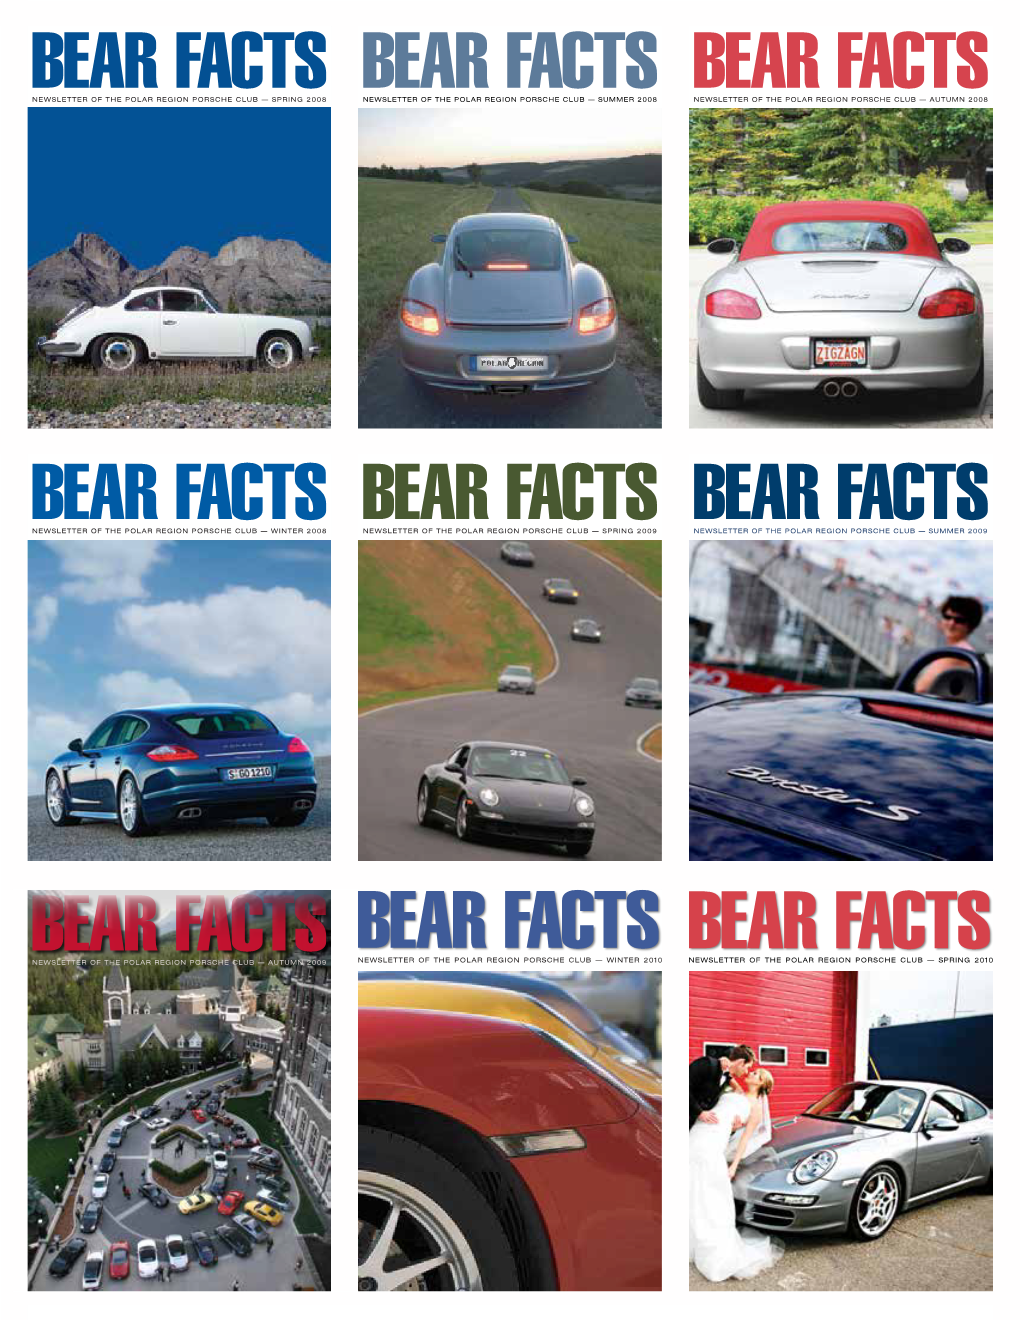 Bear Facts Newsletter of the Polar Region Porsche Club — Summer 2008